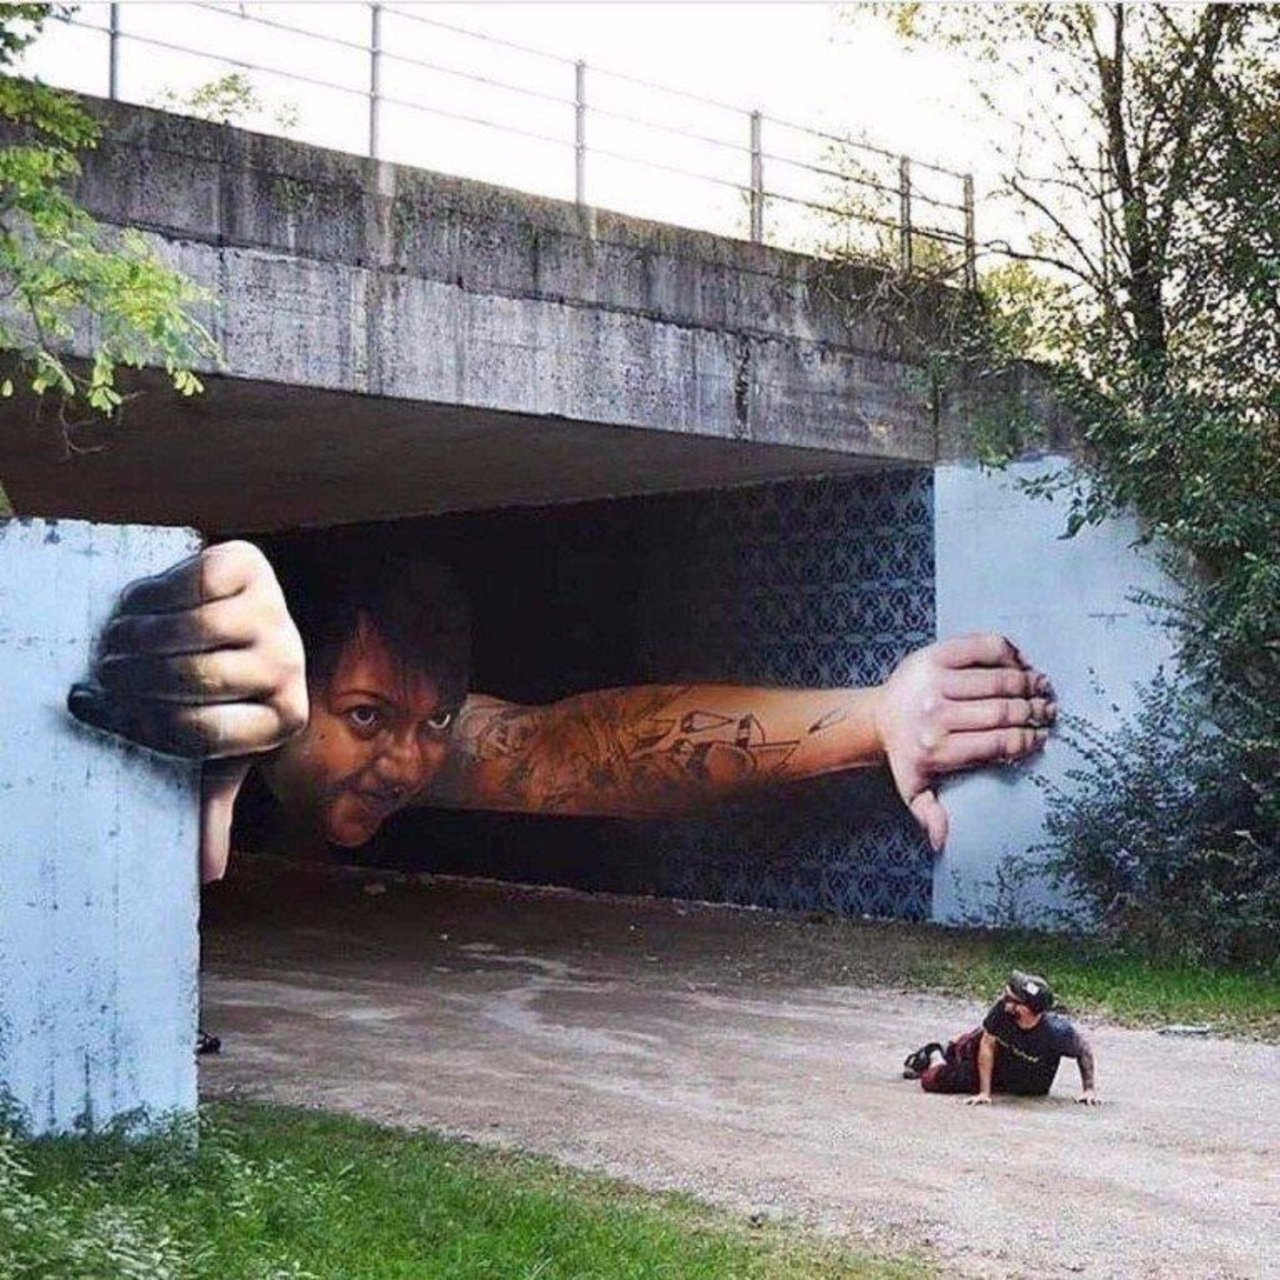 graffiti art under the bridge :)#graffiti #art #bridge https://t.co/5EqPqcIcjr